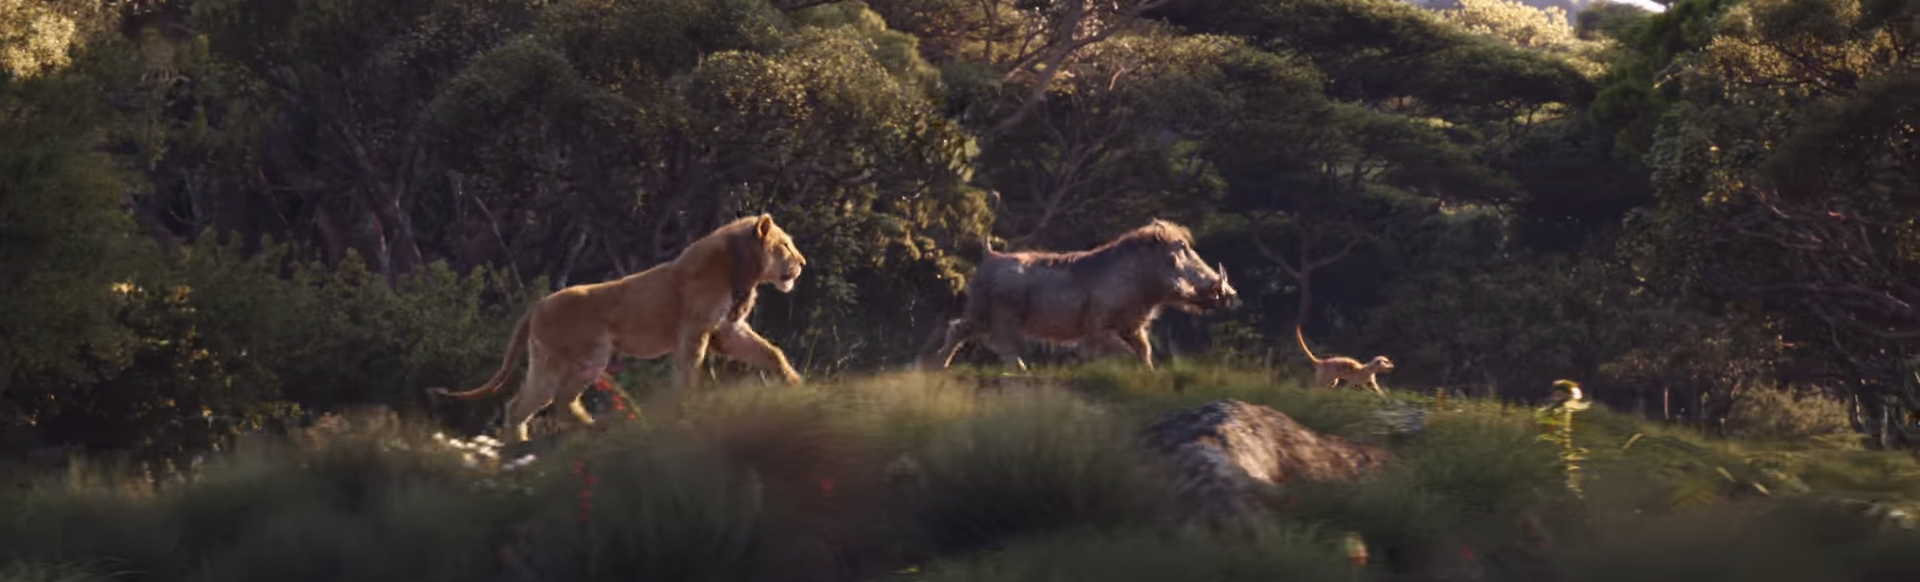 The Lion King. Image Credit: Disney. 